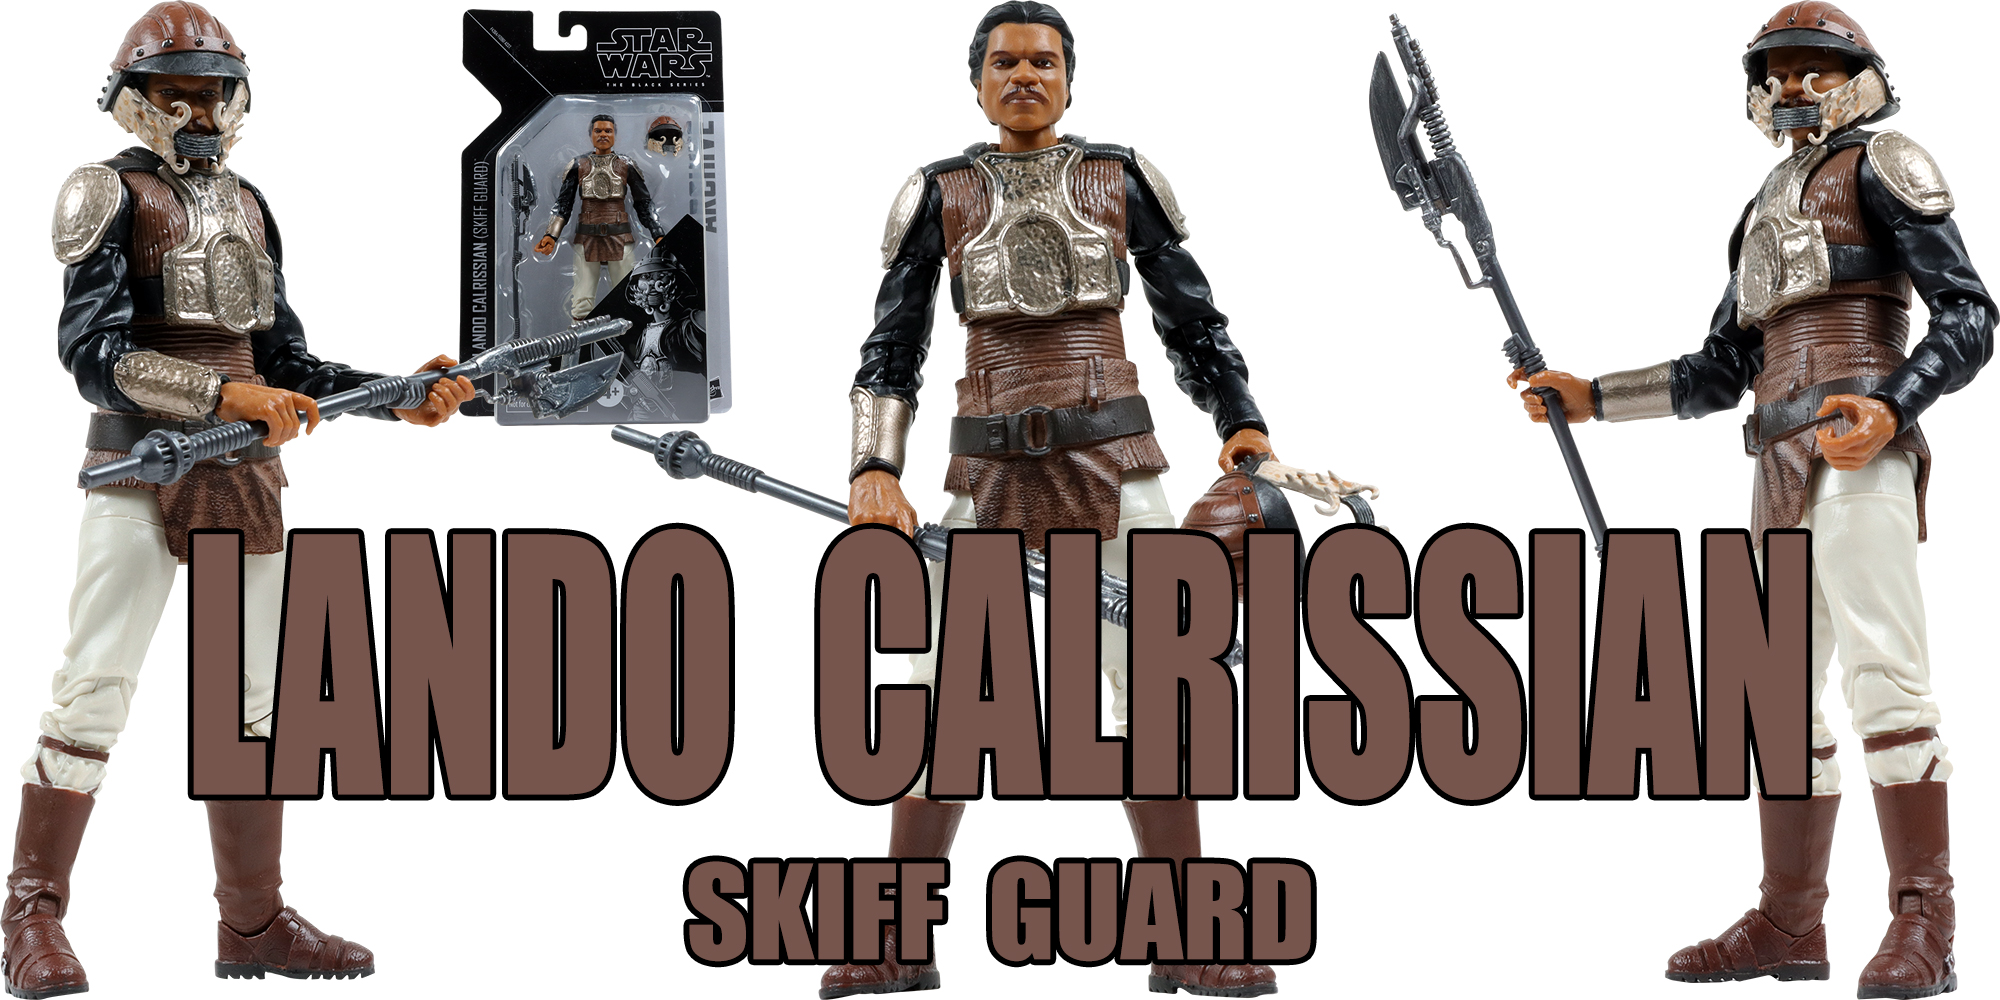 Black Series Lando Calrissian Skiff Guard Added